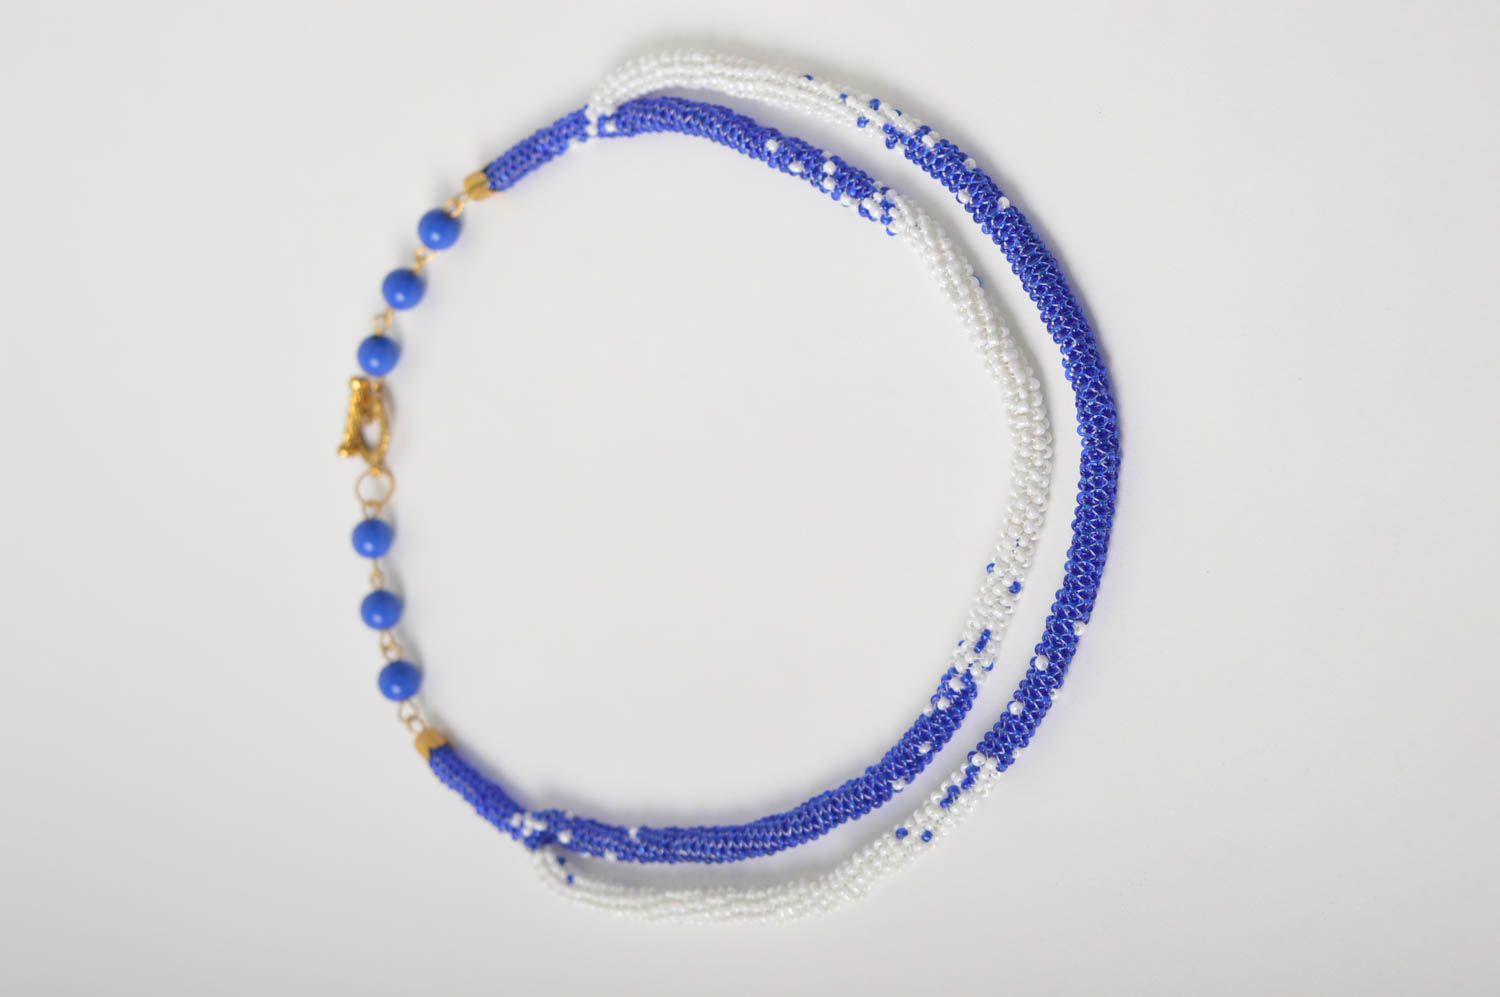 Gentle handmade beaded necklace artisan jewelry designs bead weaving ideas photo 2